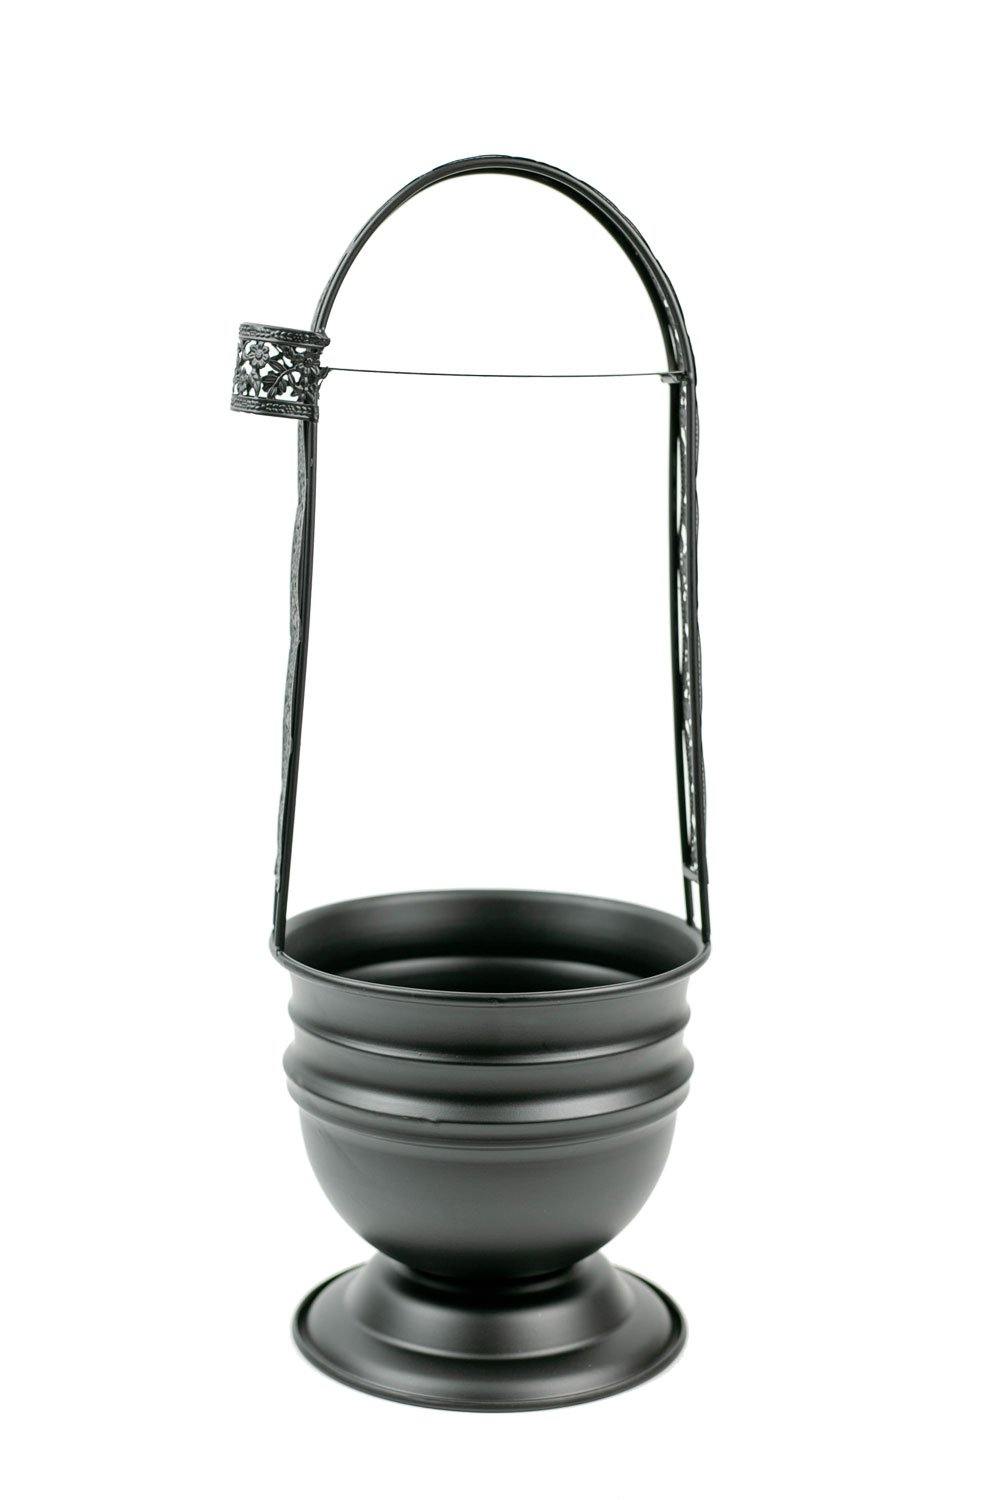 Dschinni Coal Basket Holder Black - shishagear - UK Shisha Hookah Black Friday